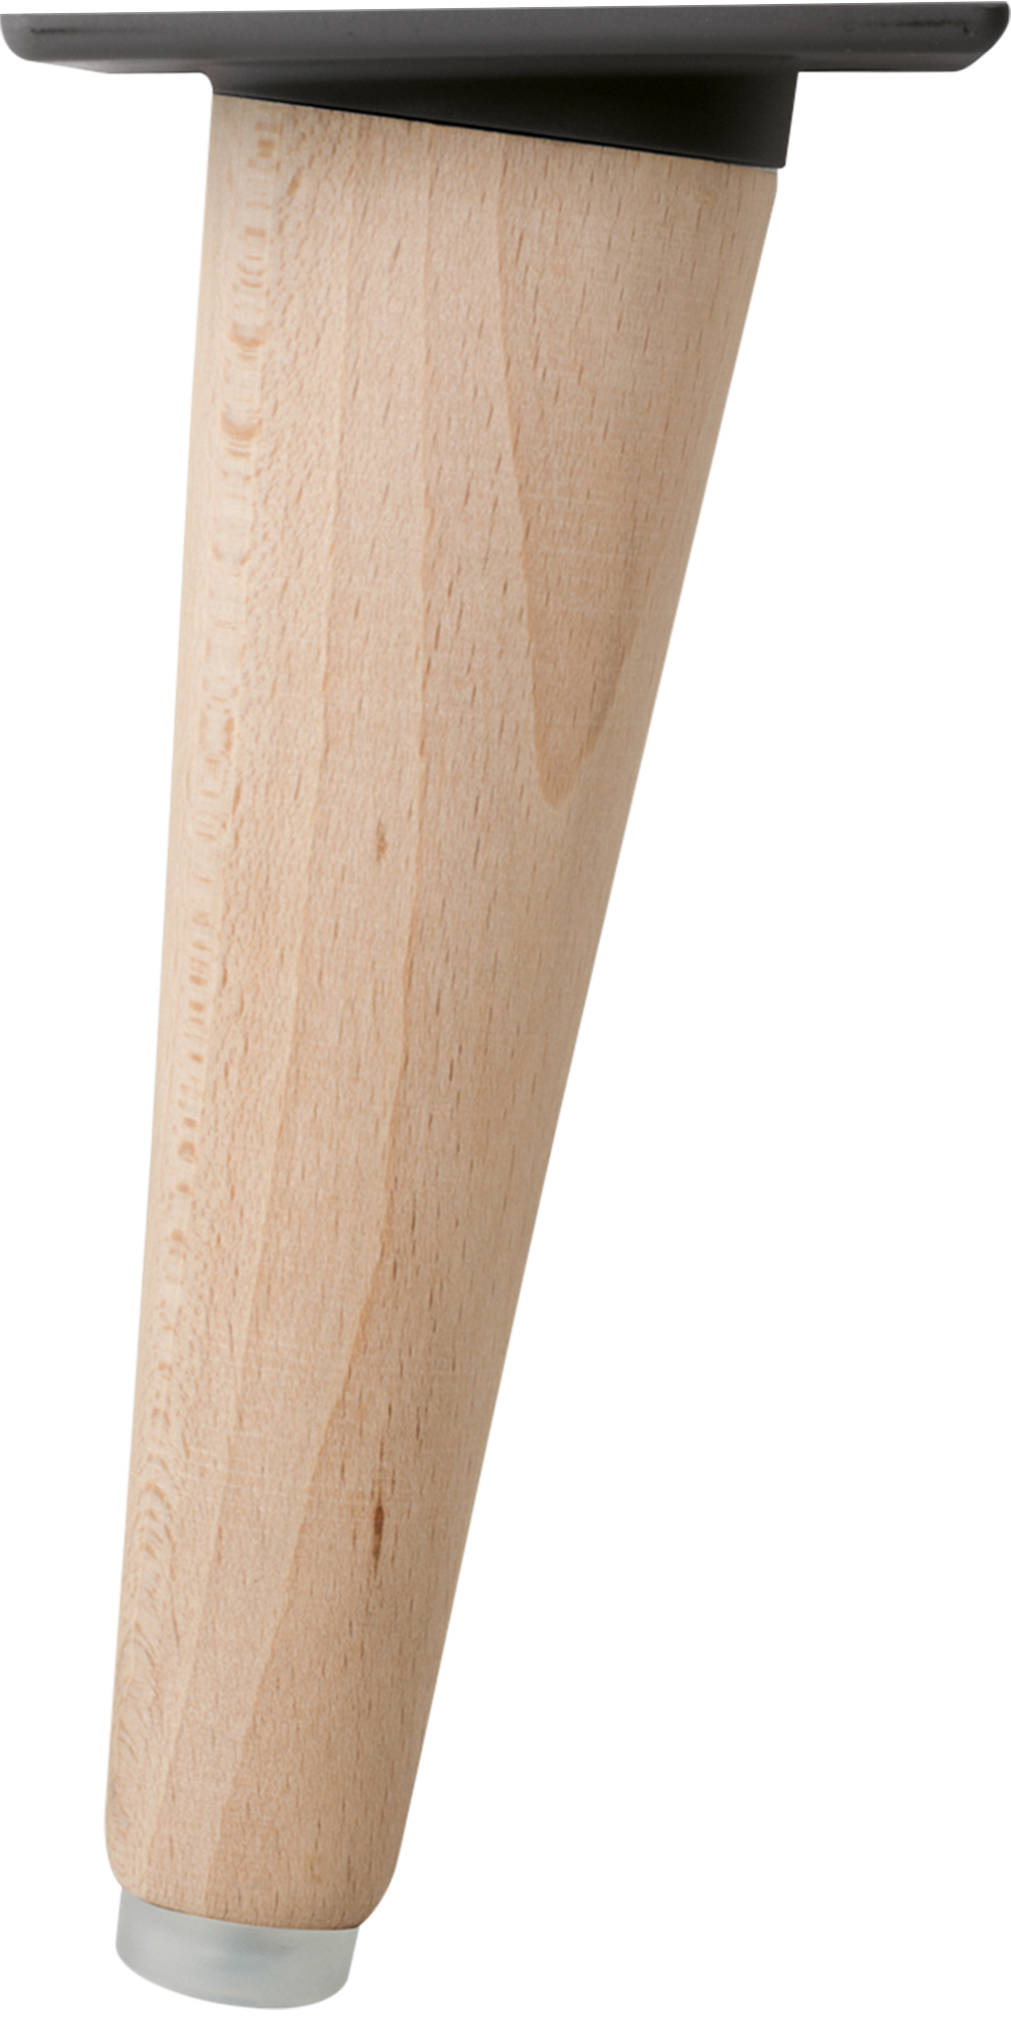 Pata fija inclinada de madera para mueble 15 cm